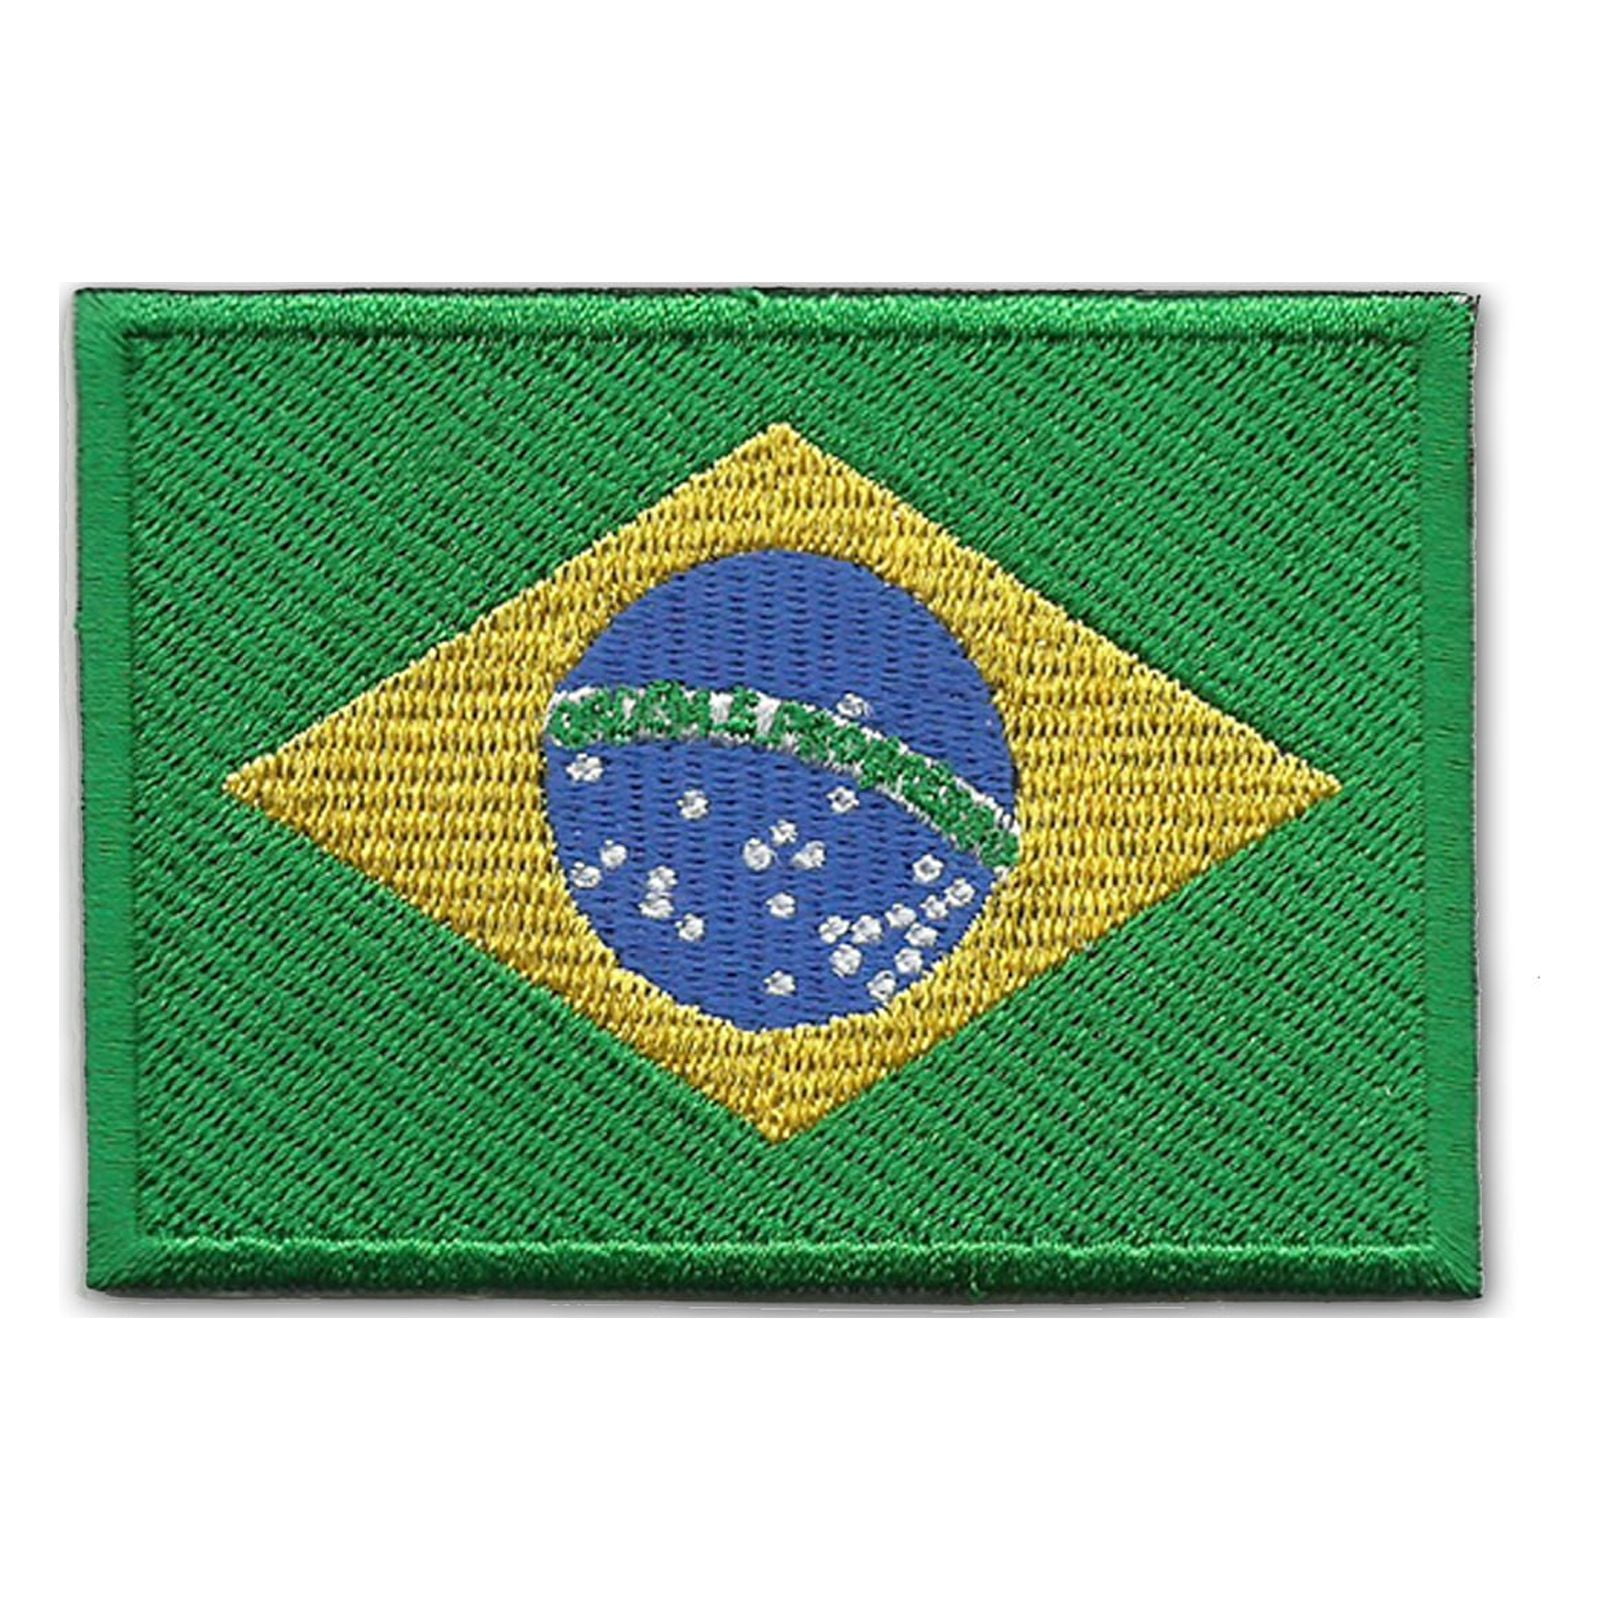 Brasil Brazil Brazilian National Flag Souvenir 3.5” long Embroidered Patch  Badge